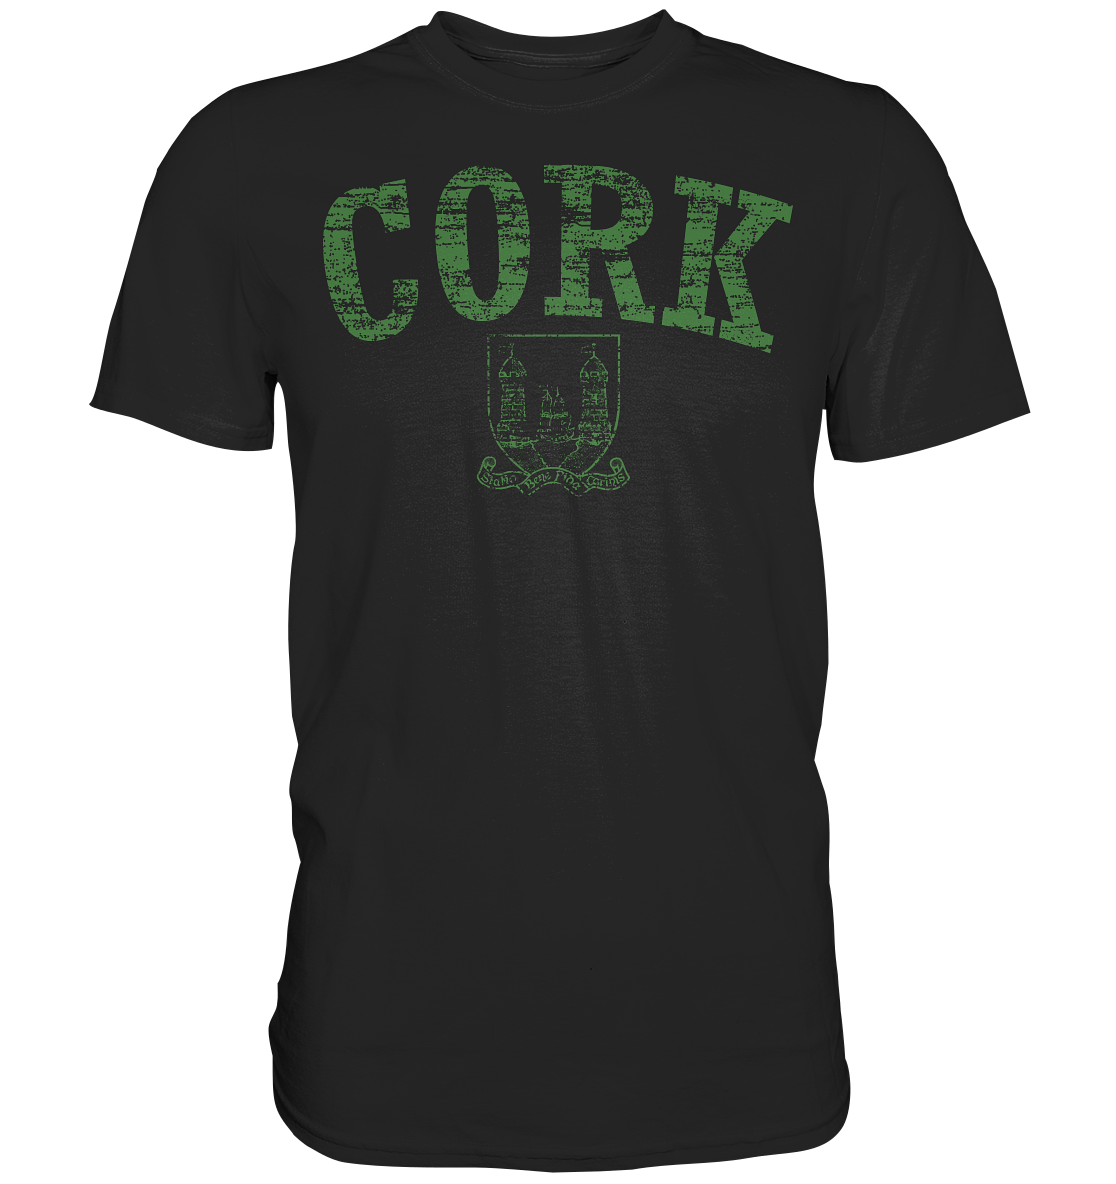 "Cork - Statio Bene Fida Carinis" - Premium Shirt